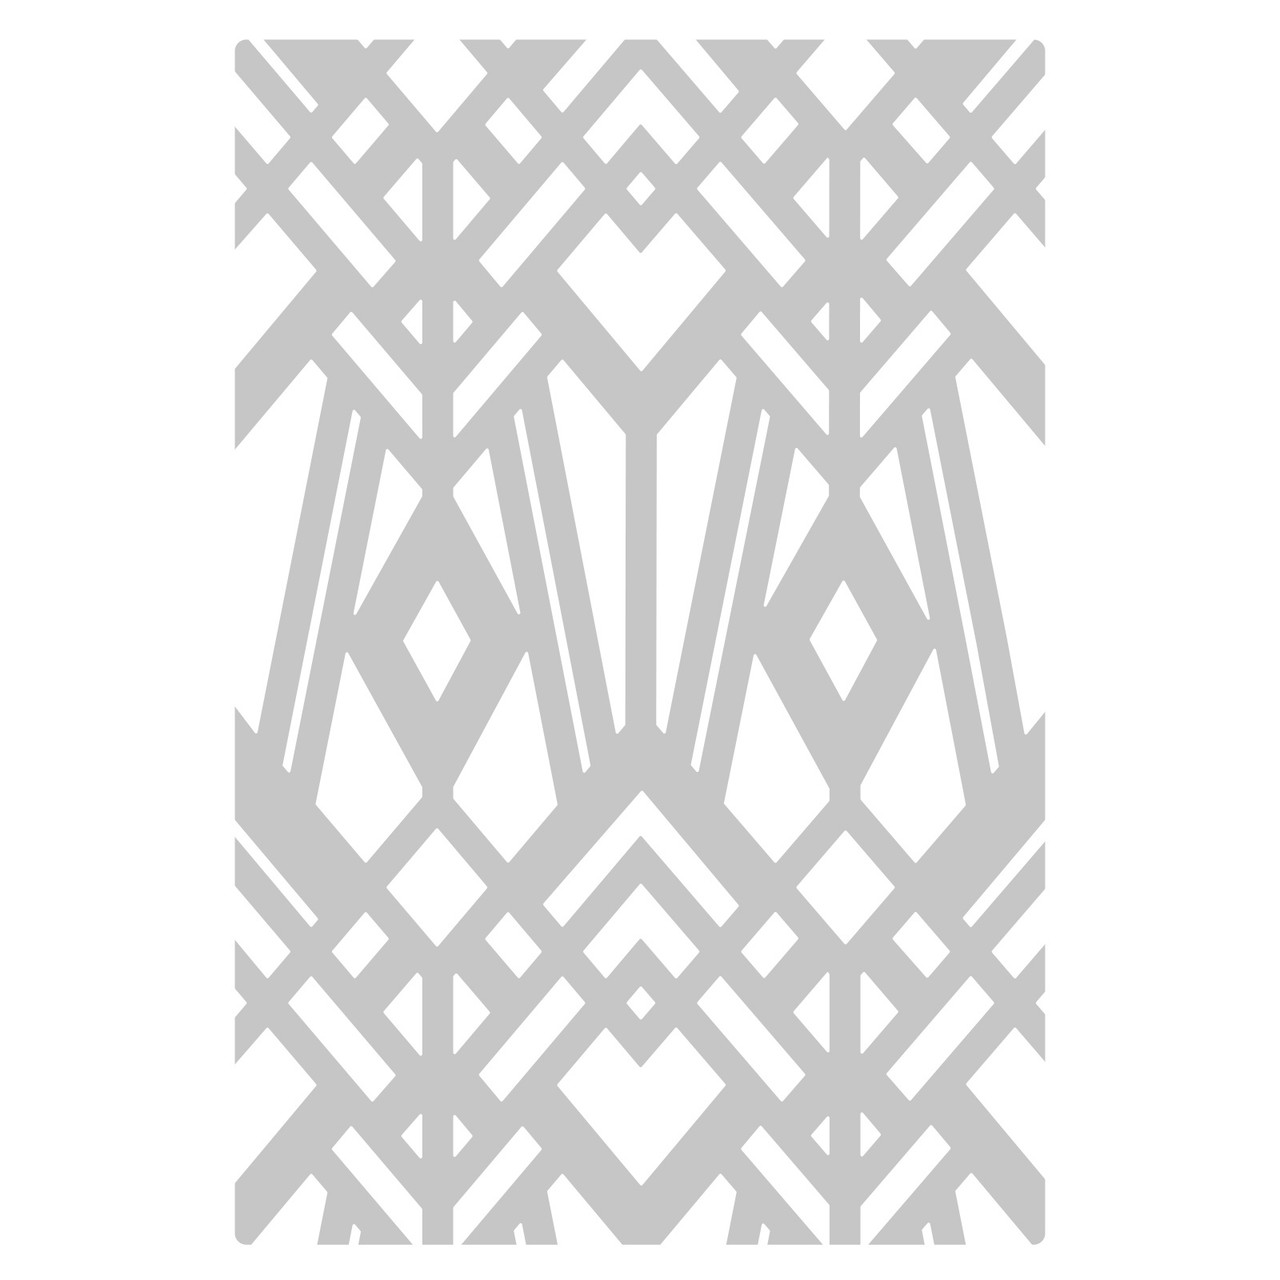  Sizzix Multi-Level Textured Impressions Embossing Folder Fan  Tiles by Jennifer Ogborn, 665746